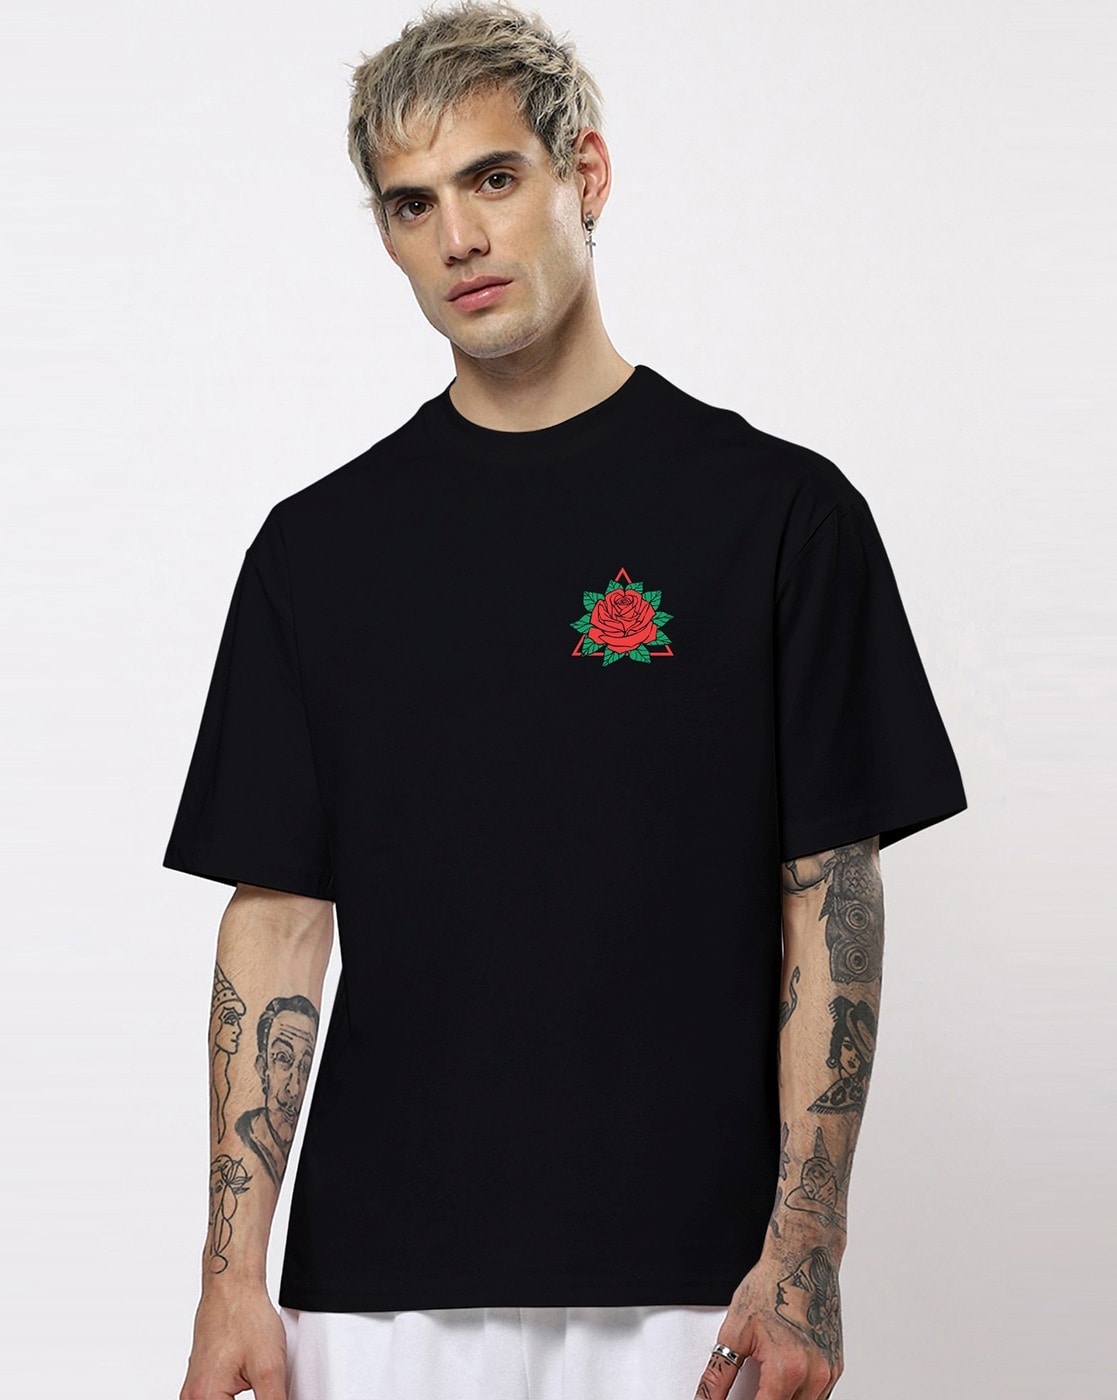 Type O Negative Band Cotton Black Unisex Classic Shirt T Shirt S-4XL IK370